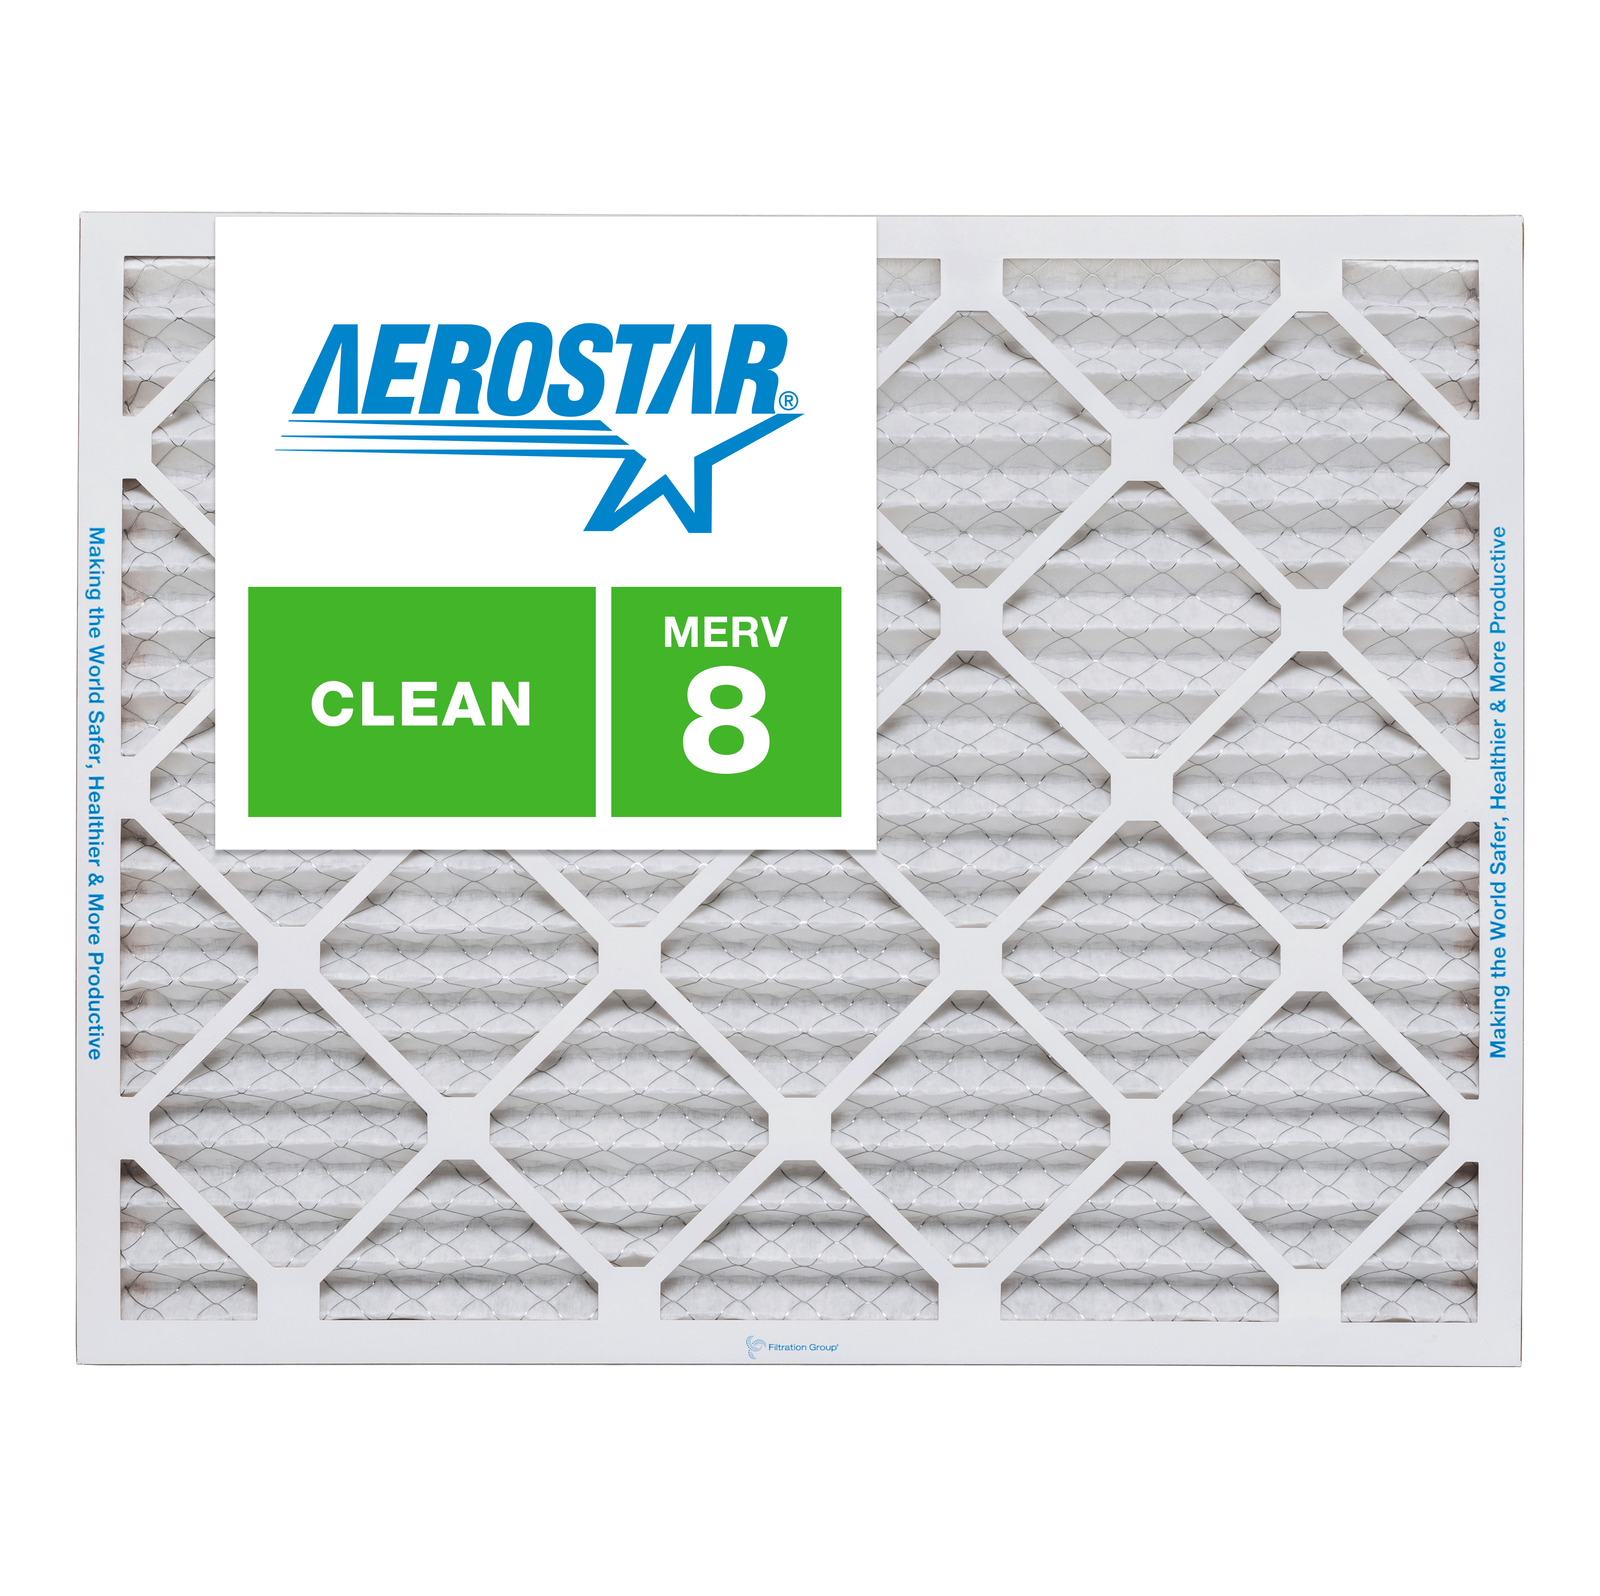 Aerostar 16x25x1 MERV 8 Furnace Air Filter, 4 Pack